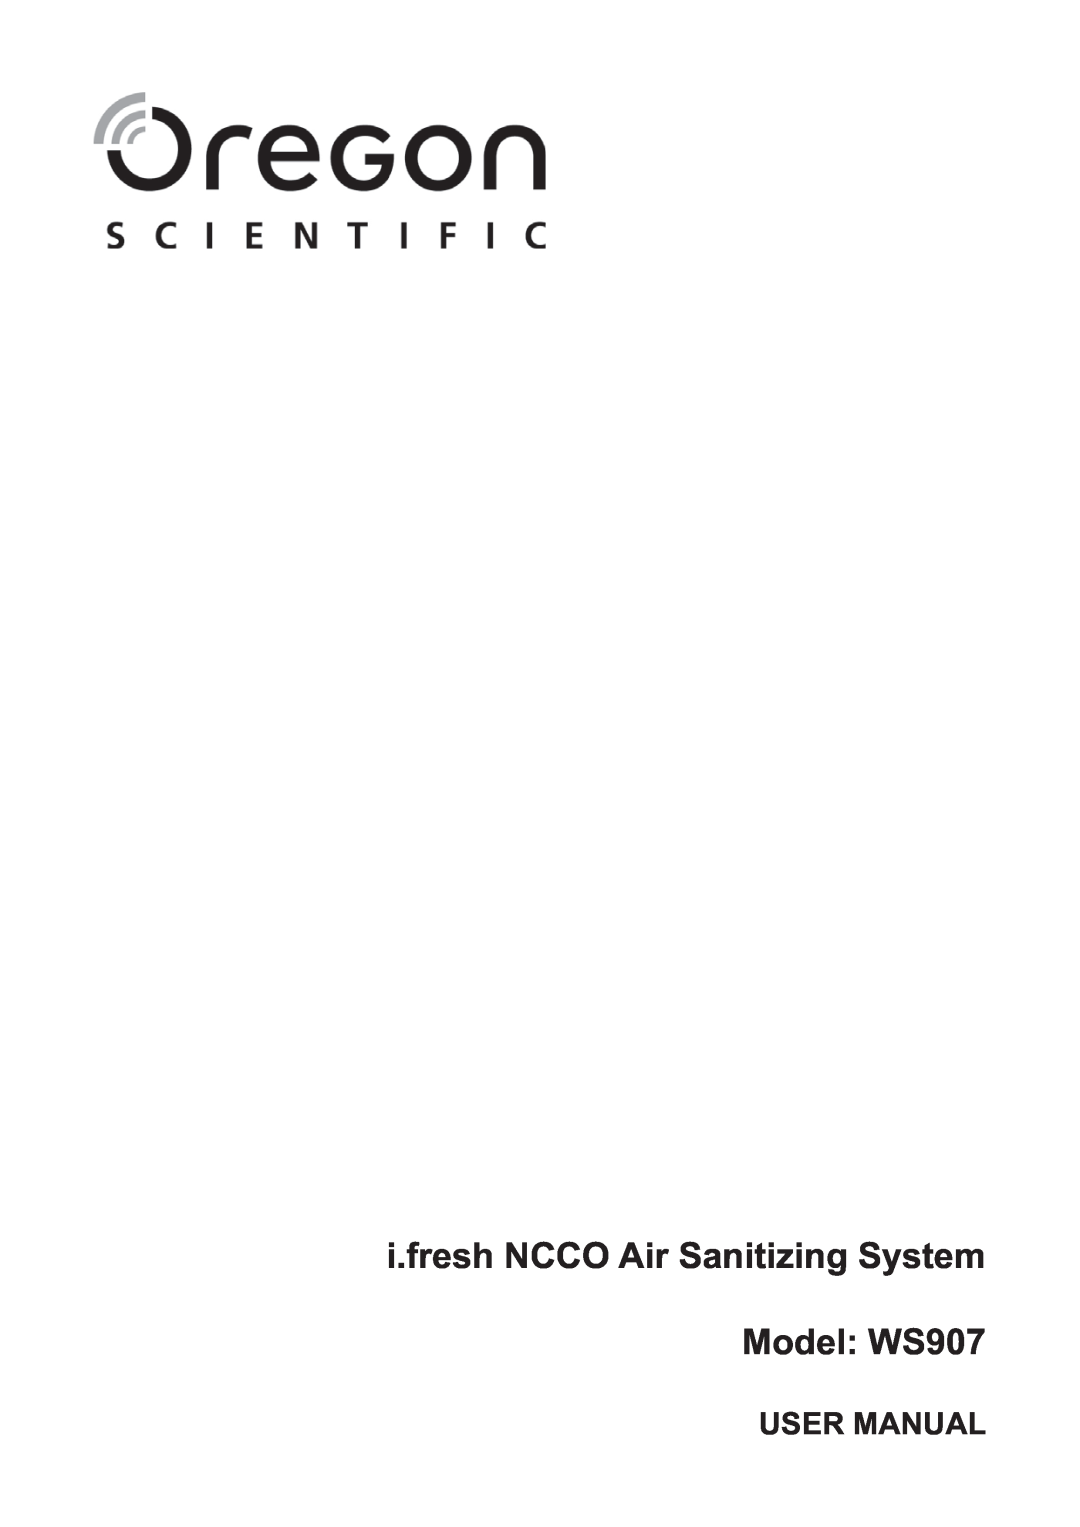 Oregon Scientific user manual i.fresh NCCO Air Sanitizing System Model WS907 